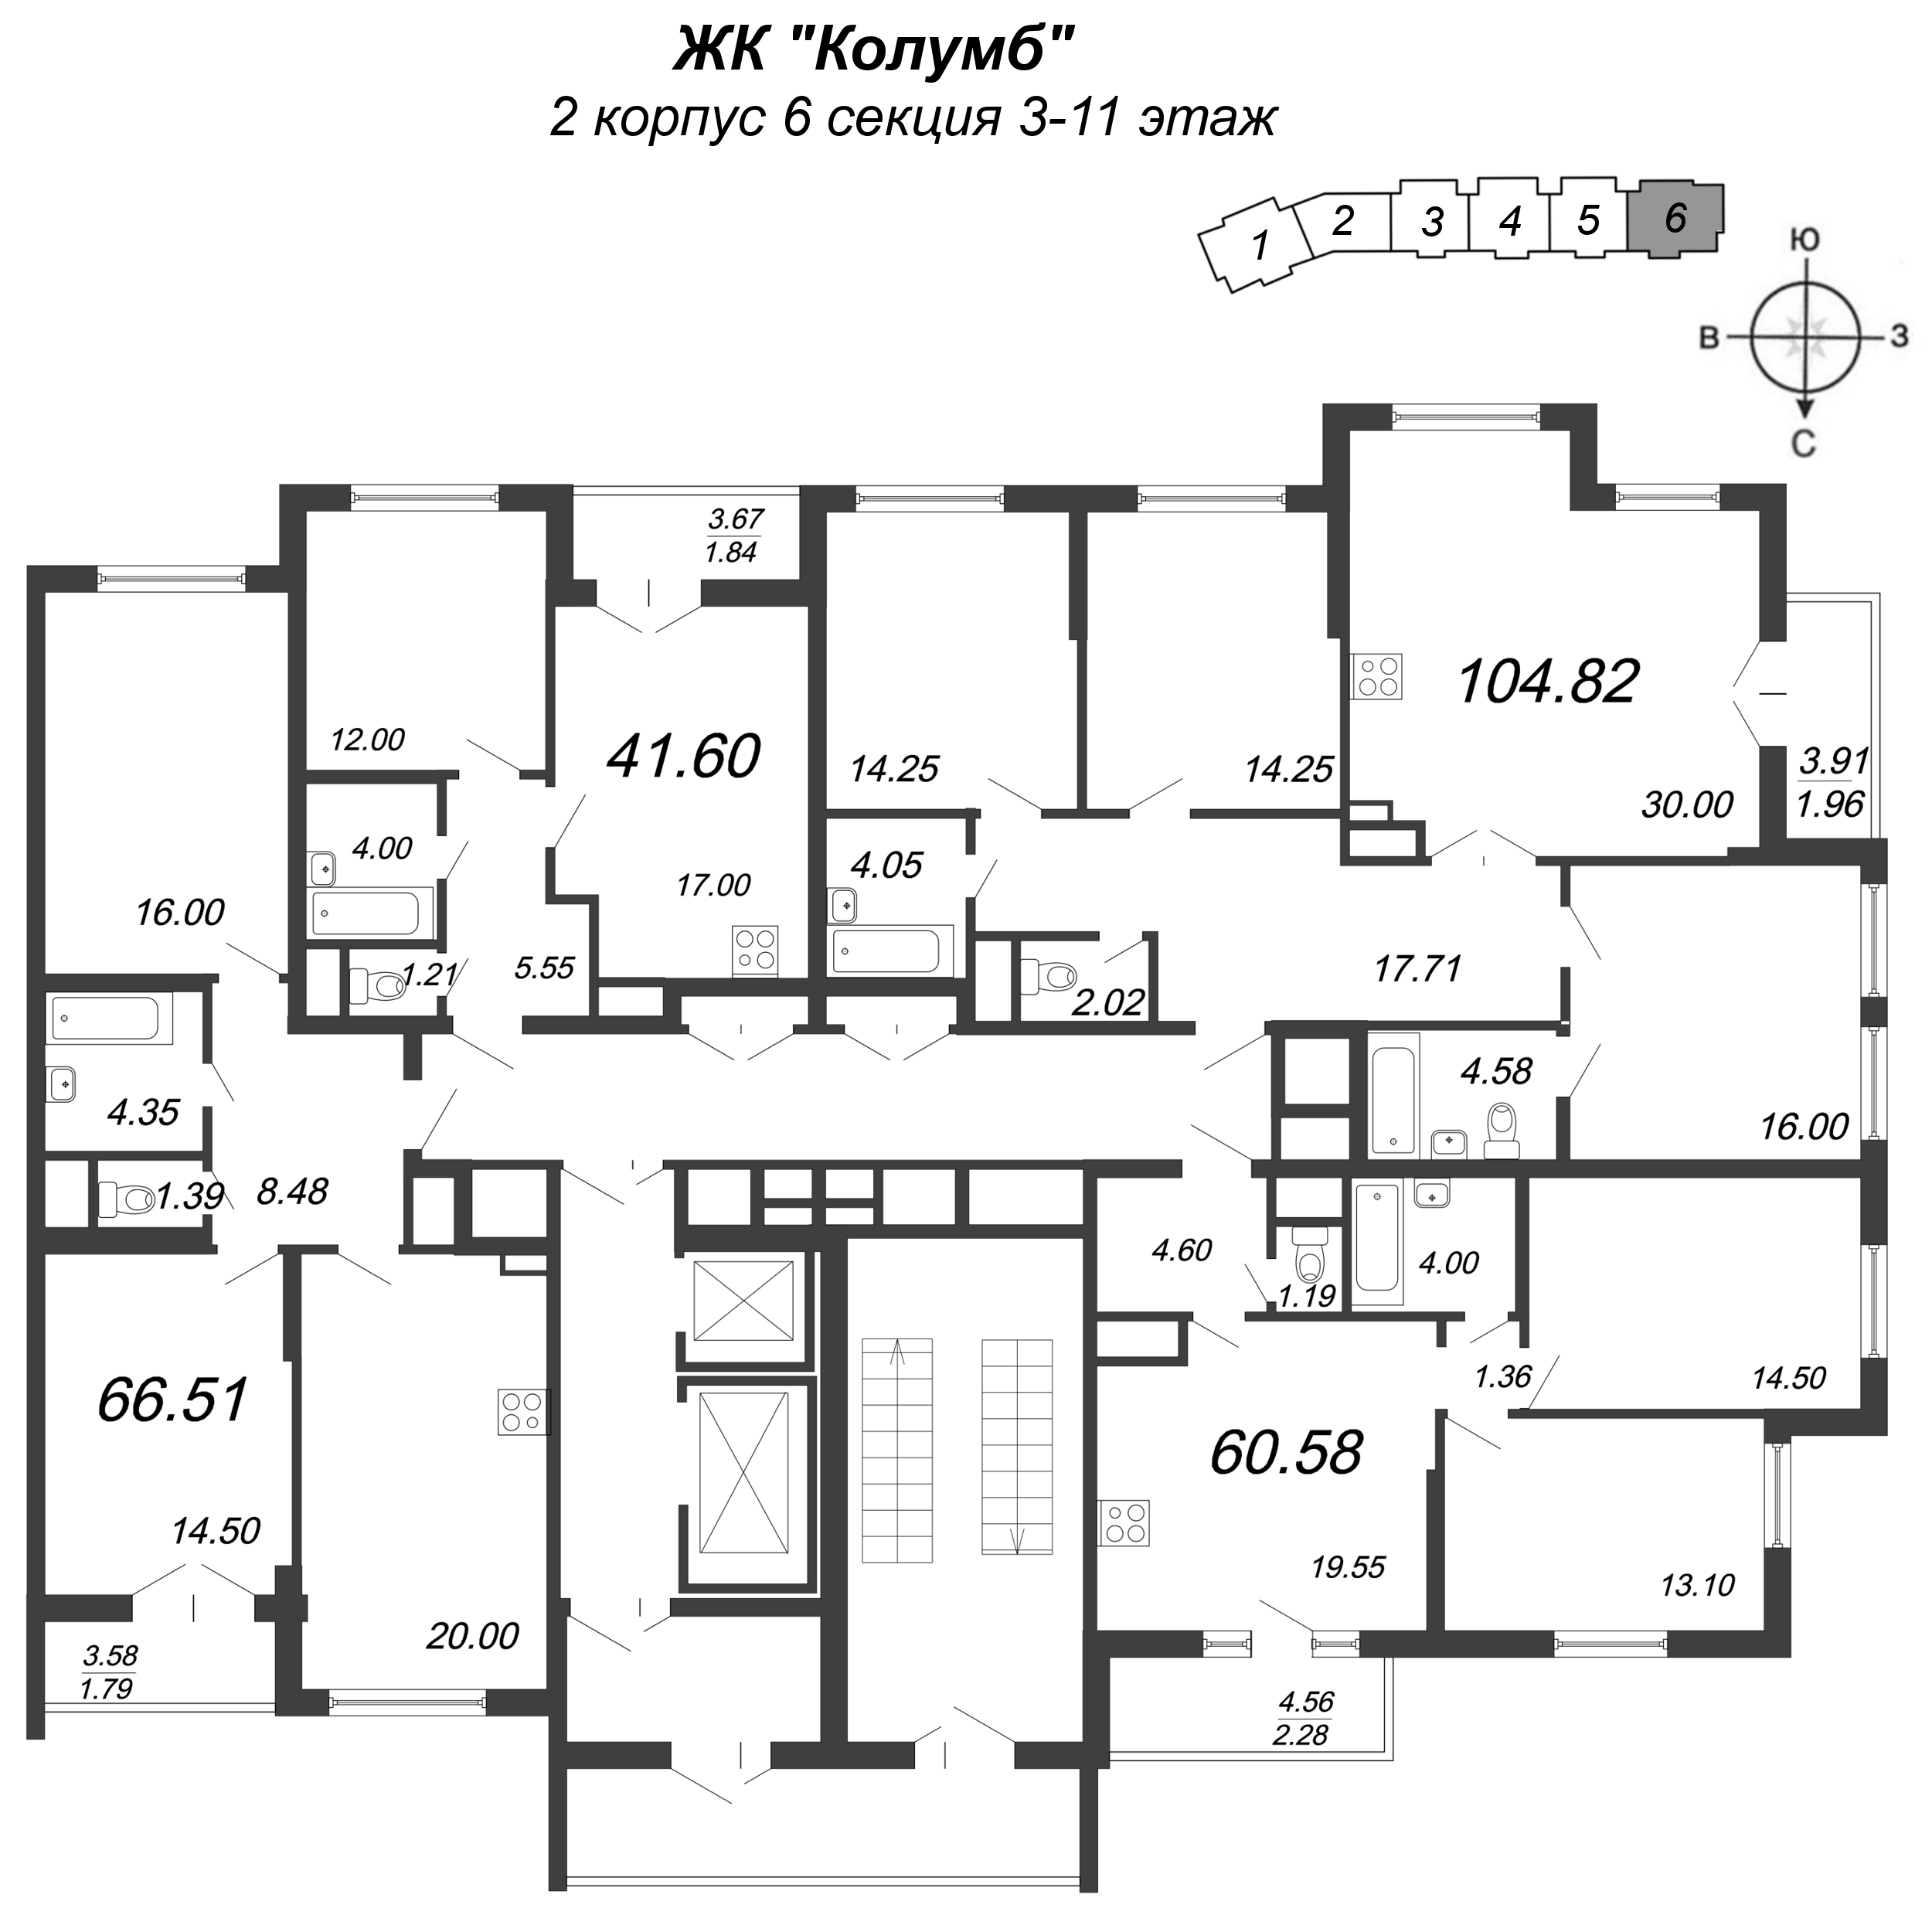 2-комнатная (Евро) квартира, 42.1 м² в ЖК "Колумб" - планировка этажа